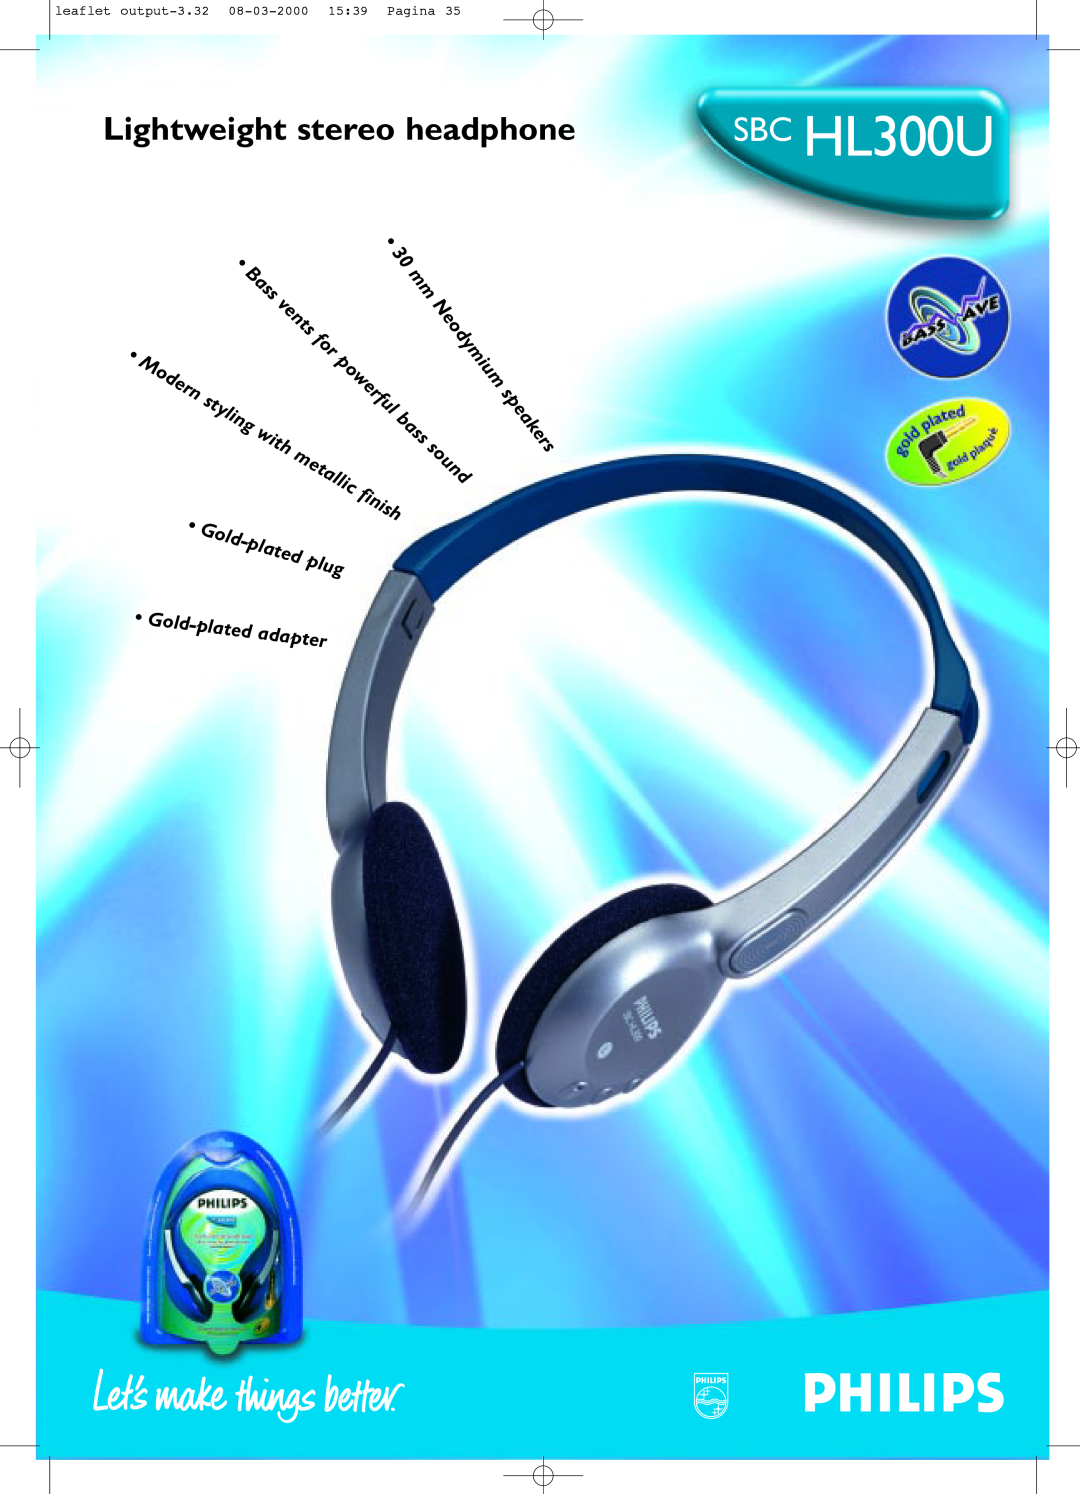 Philips SBCHL300 manual SBC HL300U, Lightweight stereo headphone, vents, bass, Neodymium, Bass, sound, Gold-platedadapter 